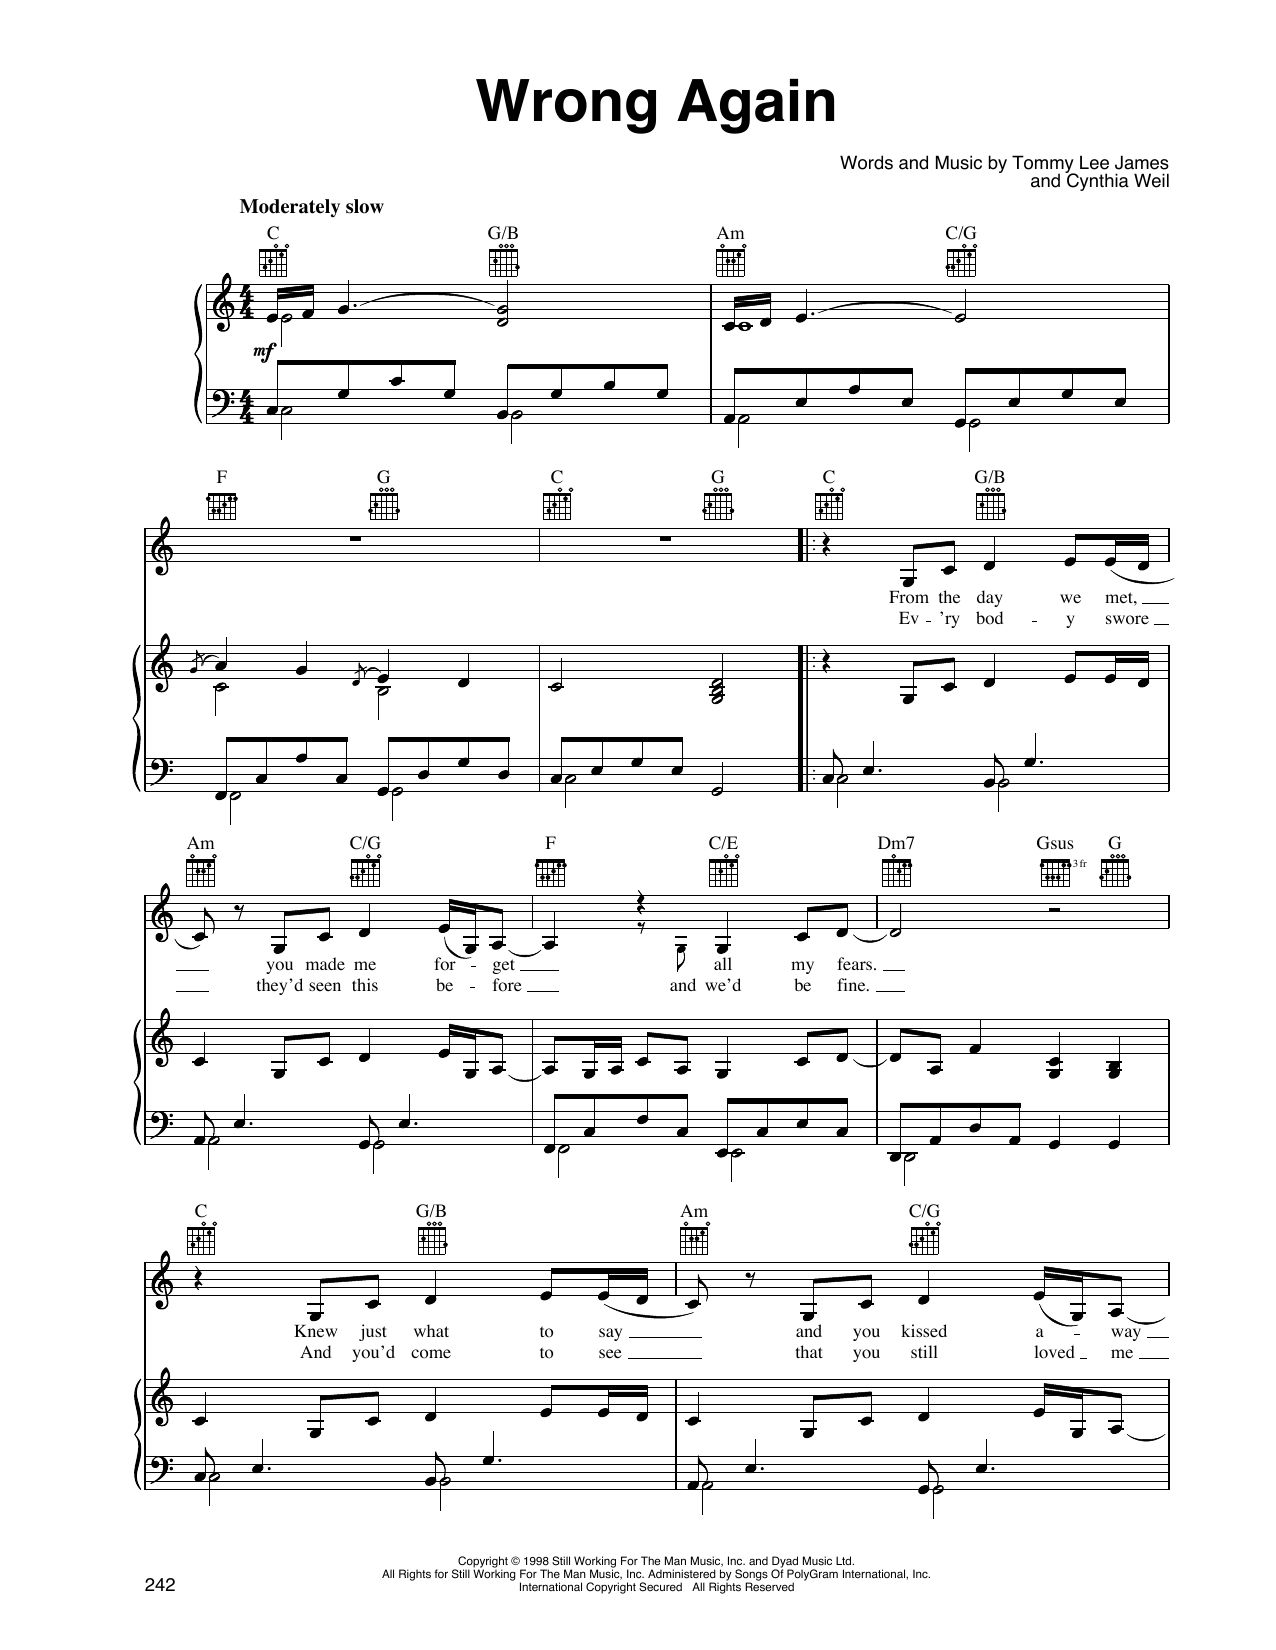 Martina McBride Wrong Again Sheet Music Notes & Chords for Piano, Vocal & Guitar (Right-Hand Melody) - Download or Print PDF